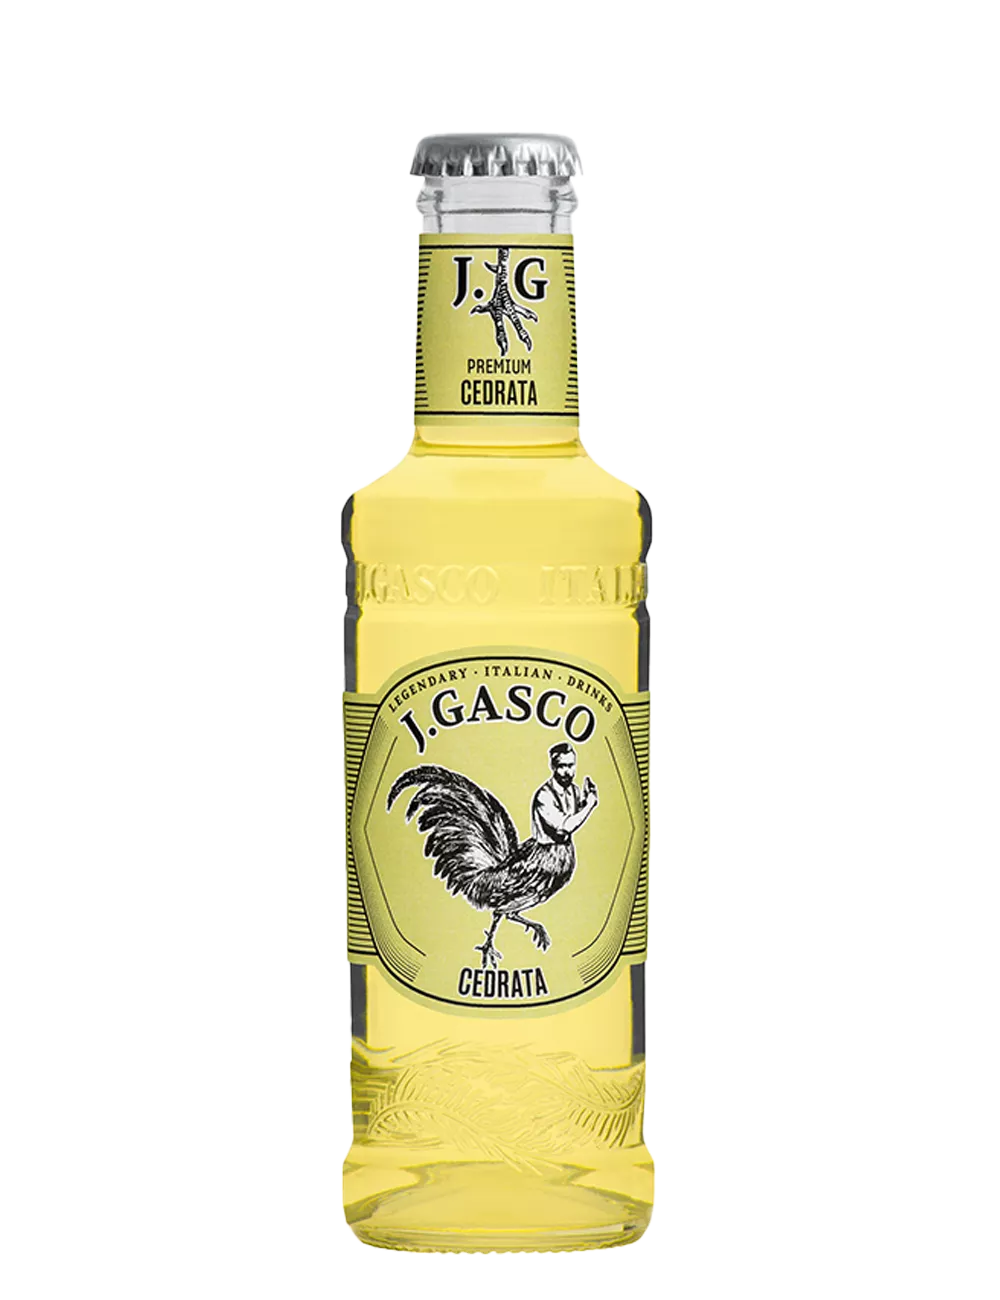 J.Gasco - Cedrata - Soft drink